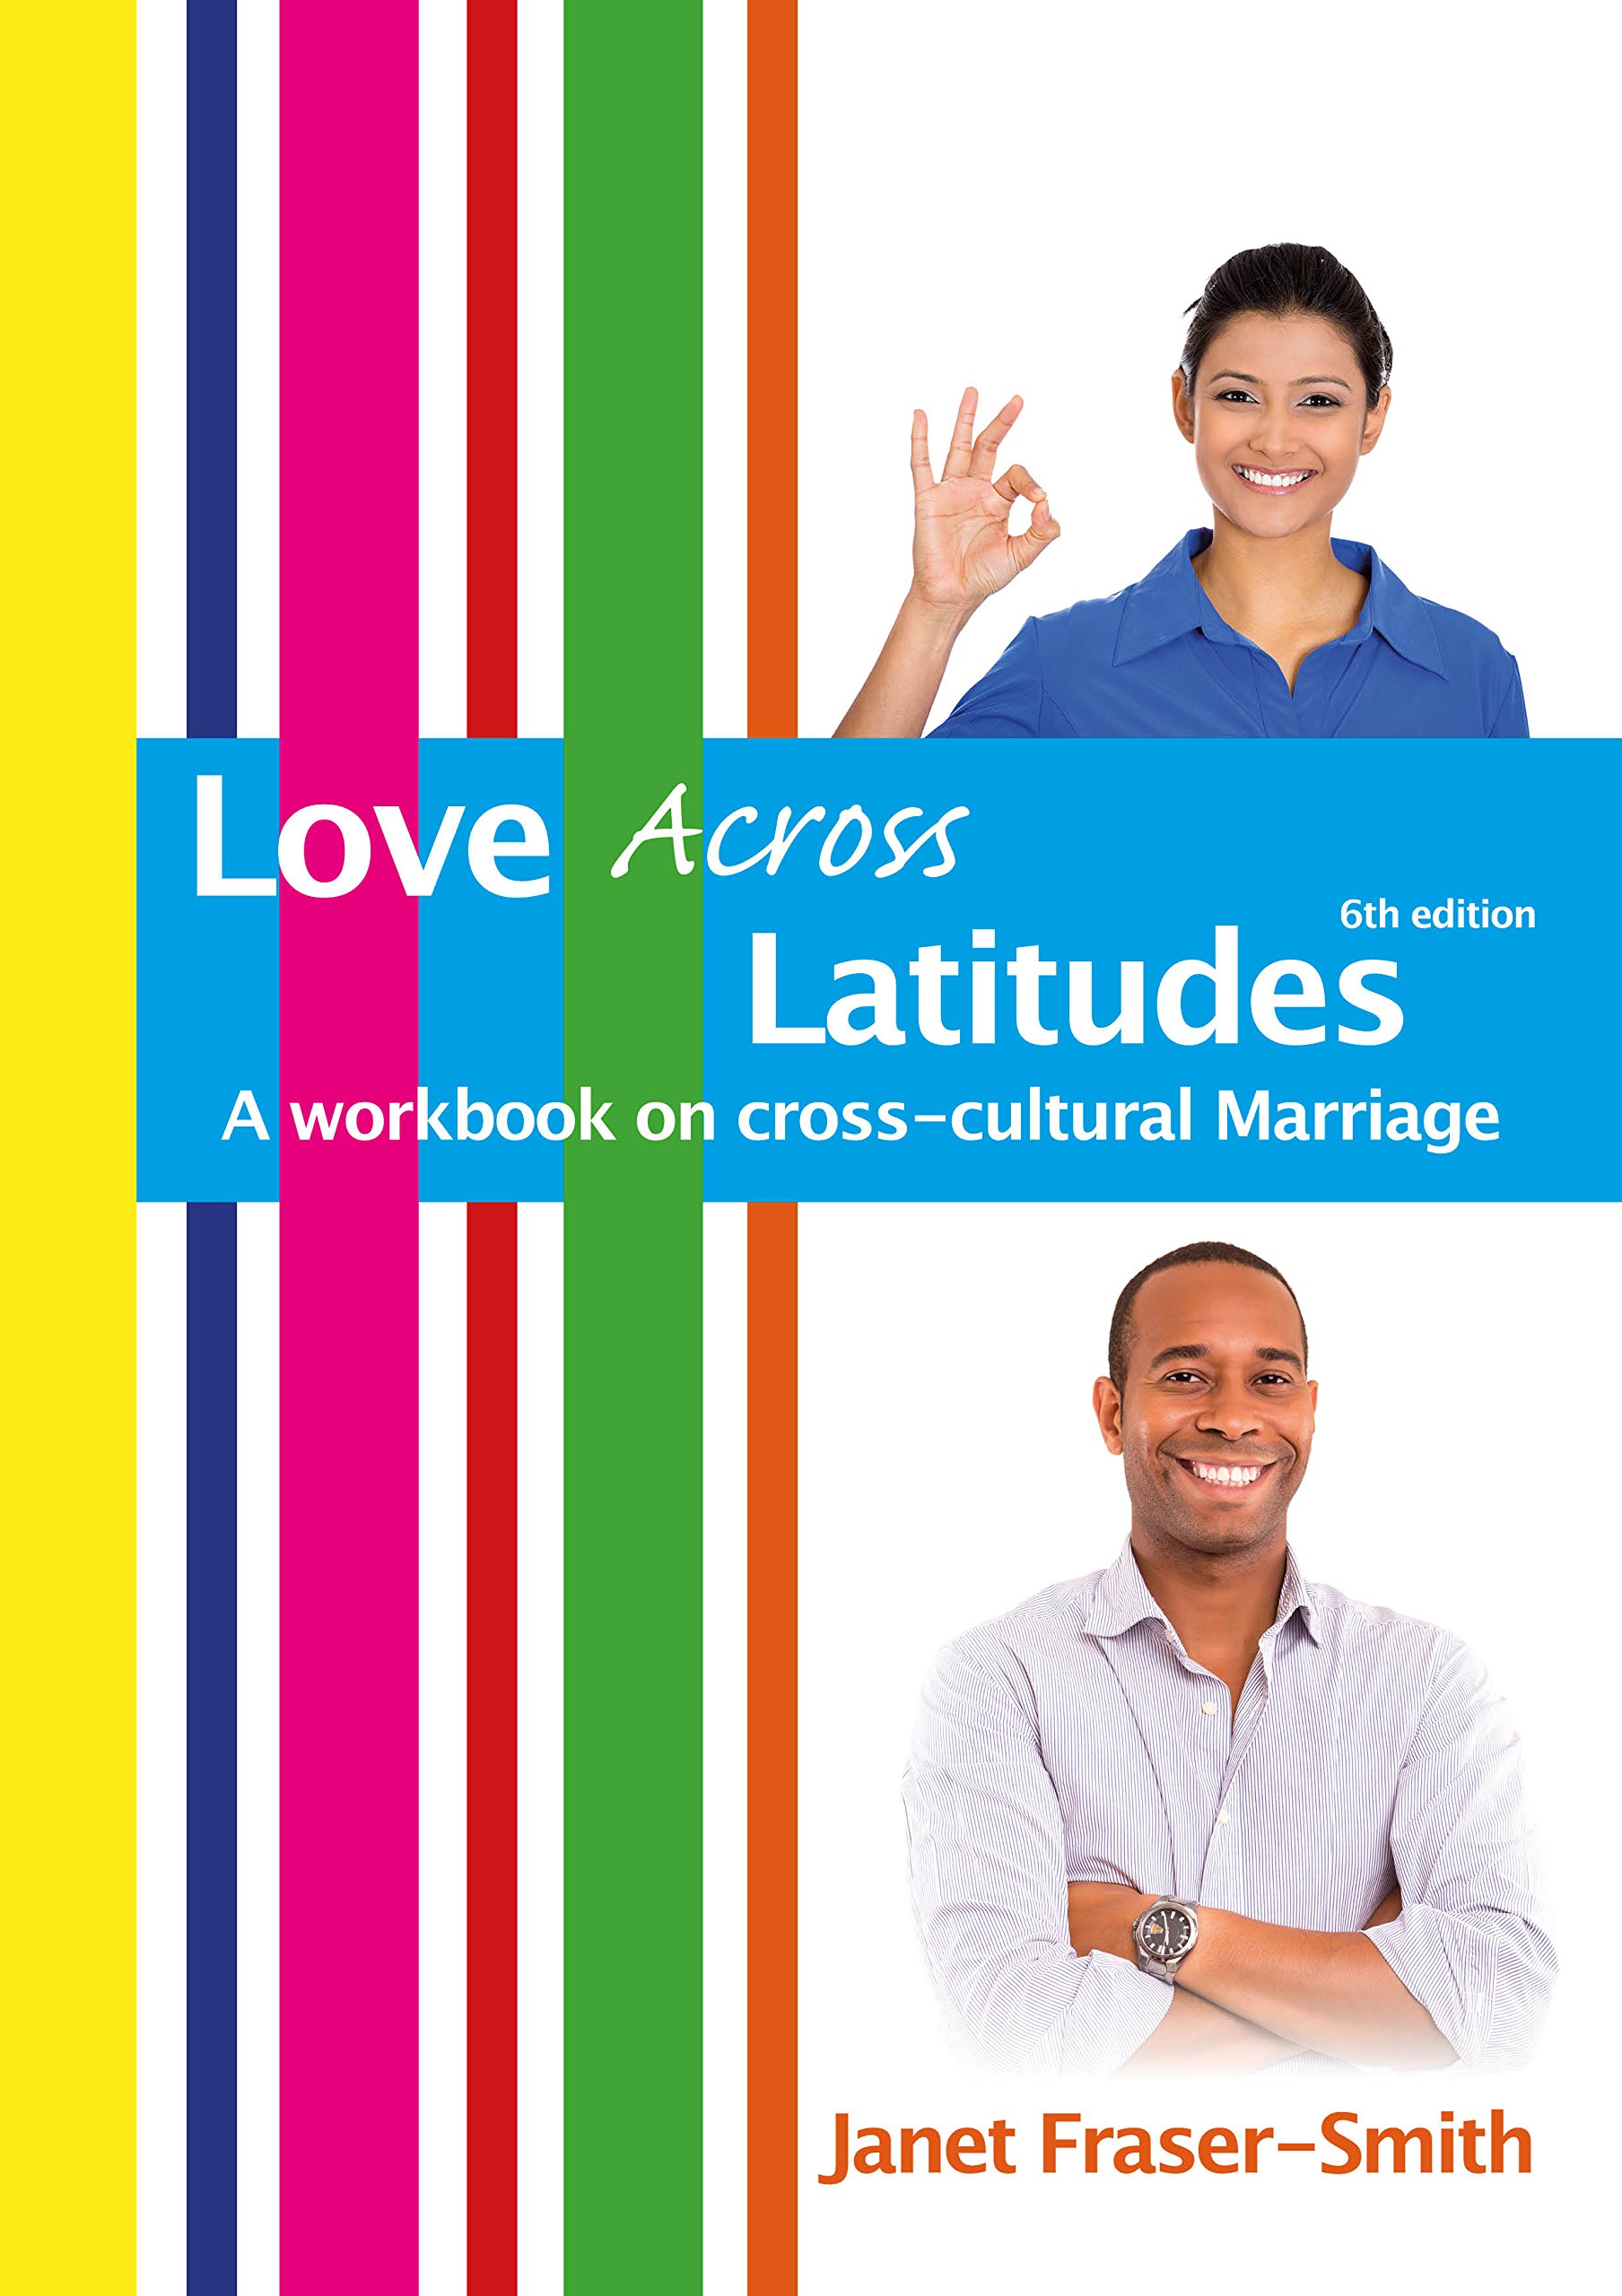 Love Across Latitudes: A Workbook on Cross-cultural Marriage Paperback – 25 Feb 2019